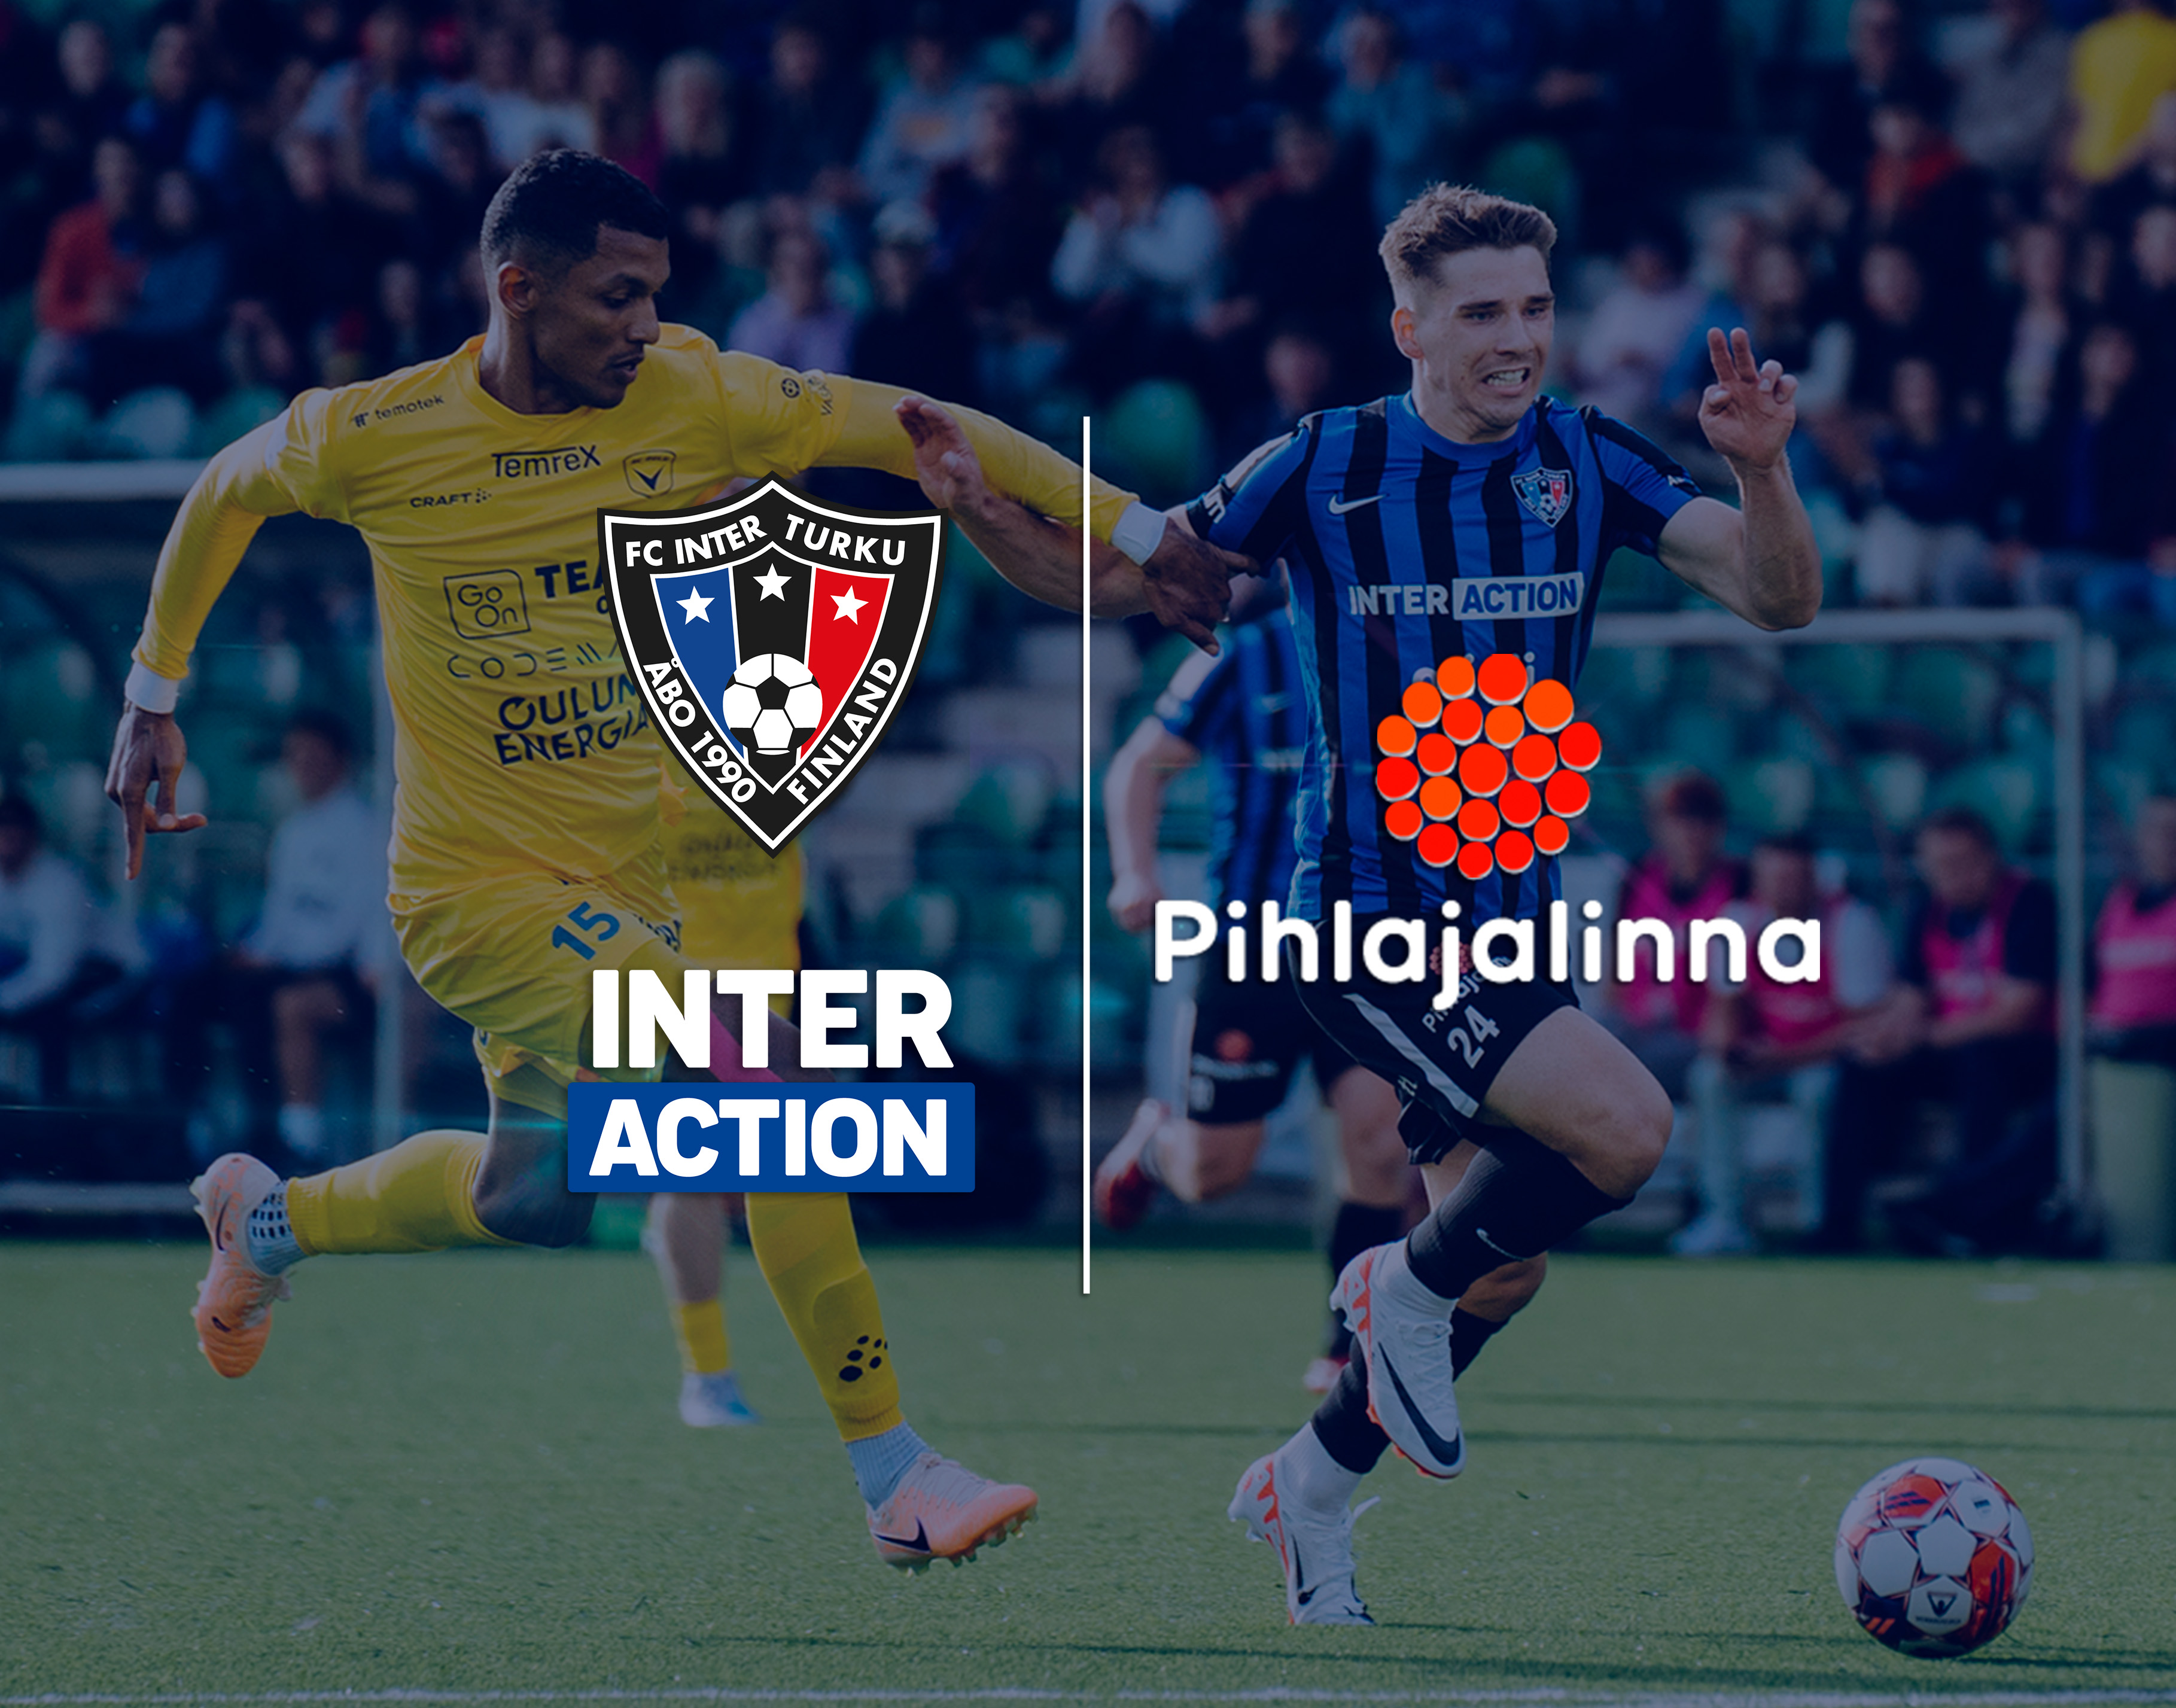 FC Inter x Pihlajalinna edustus 